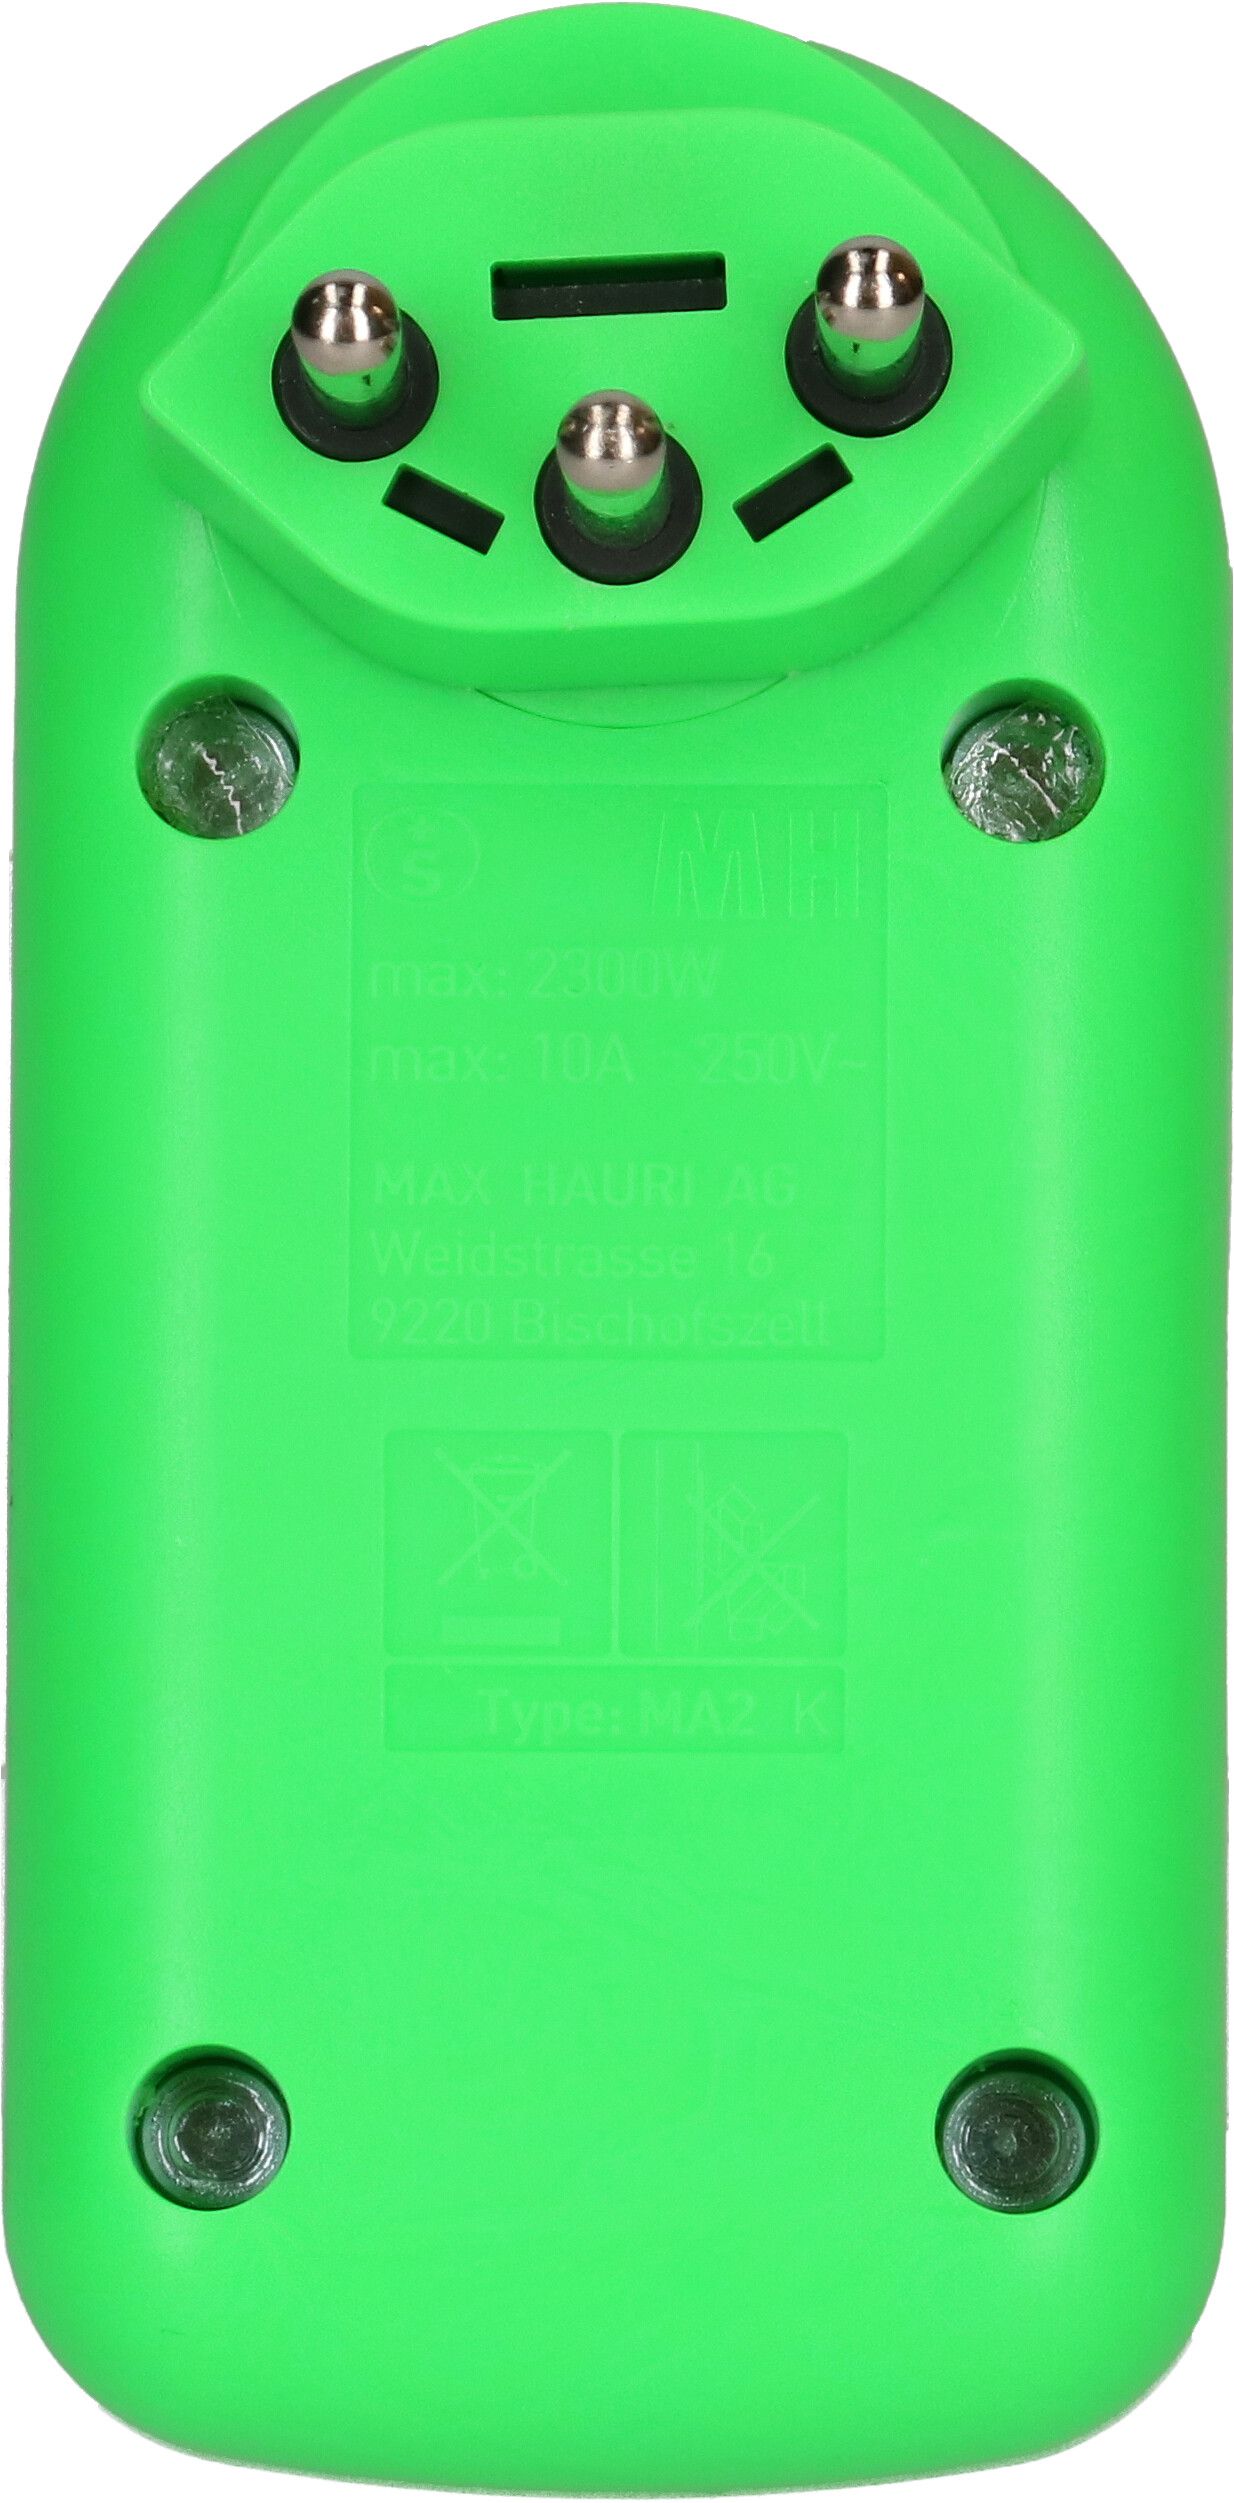 Abzweigstecker maxADAPTturn 2x Typ 13 fl-grün drehbar BS